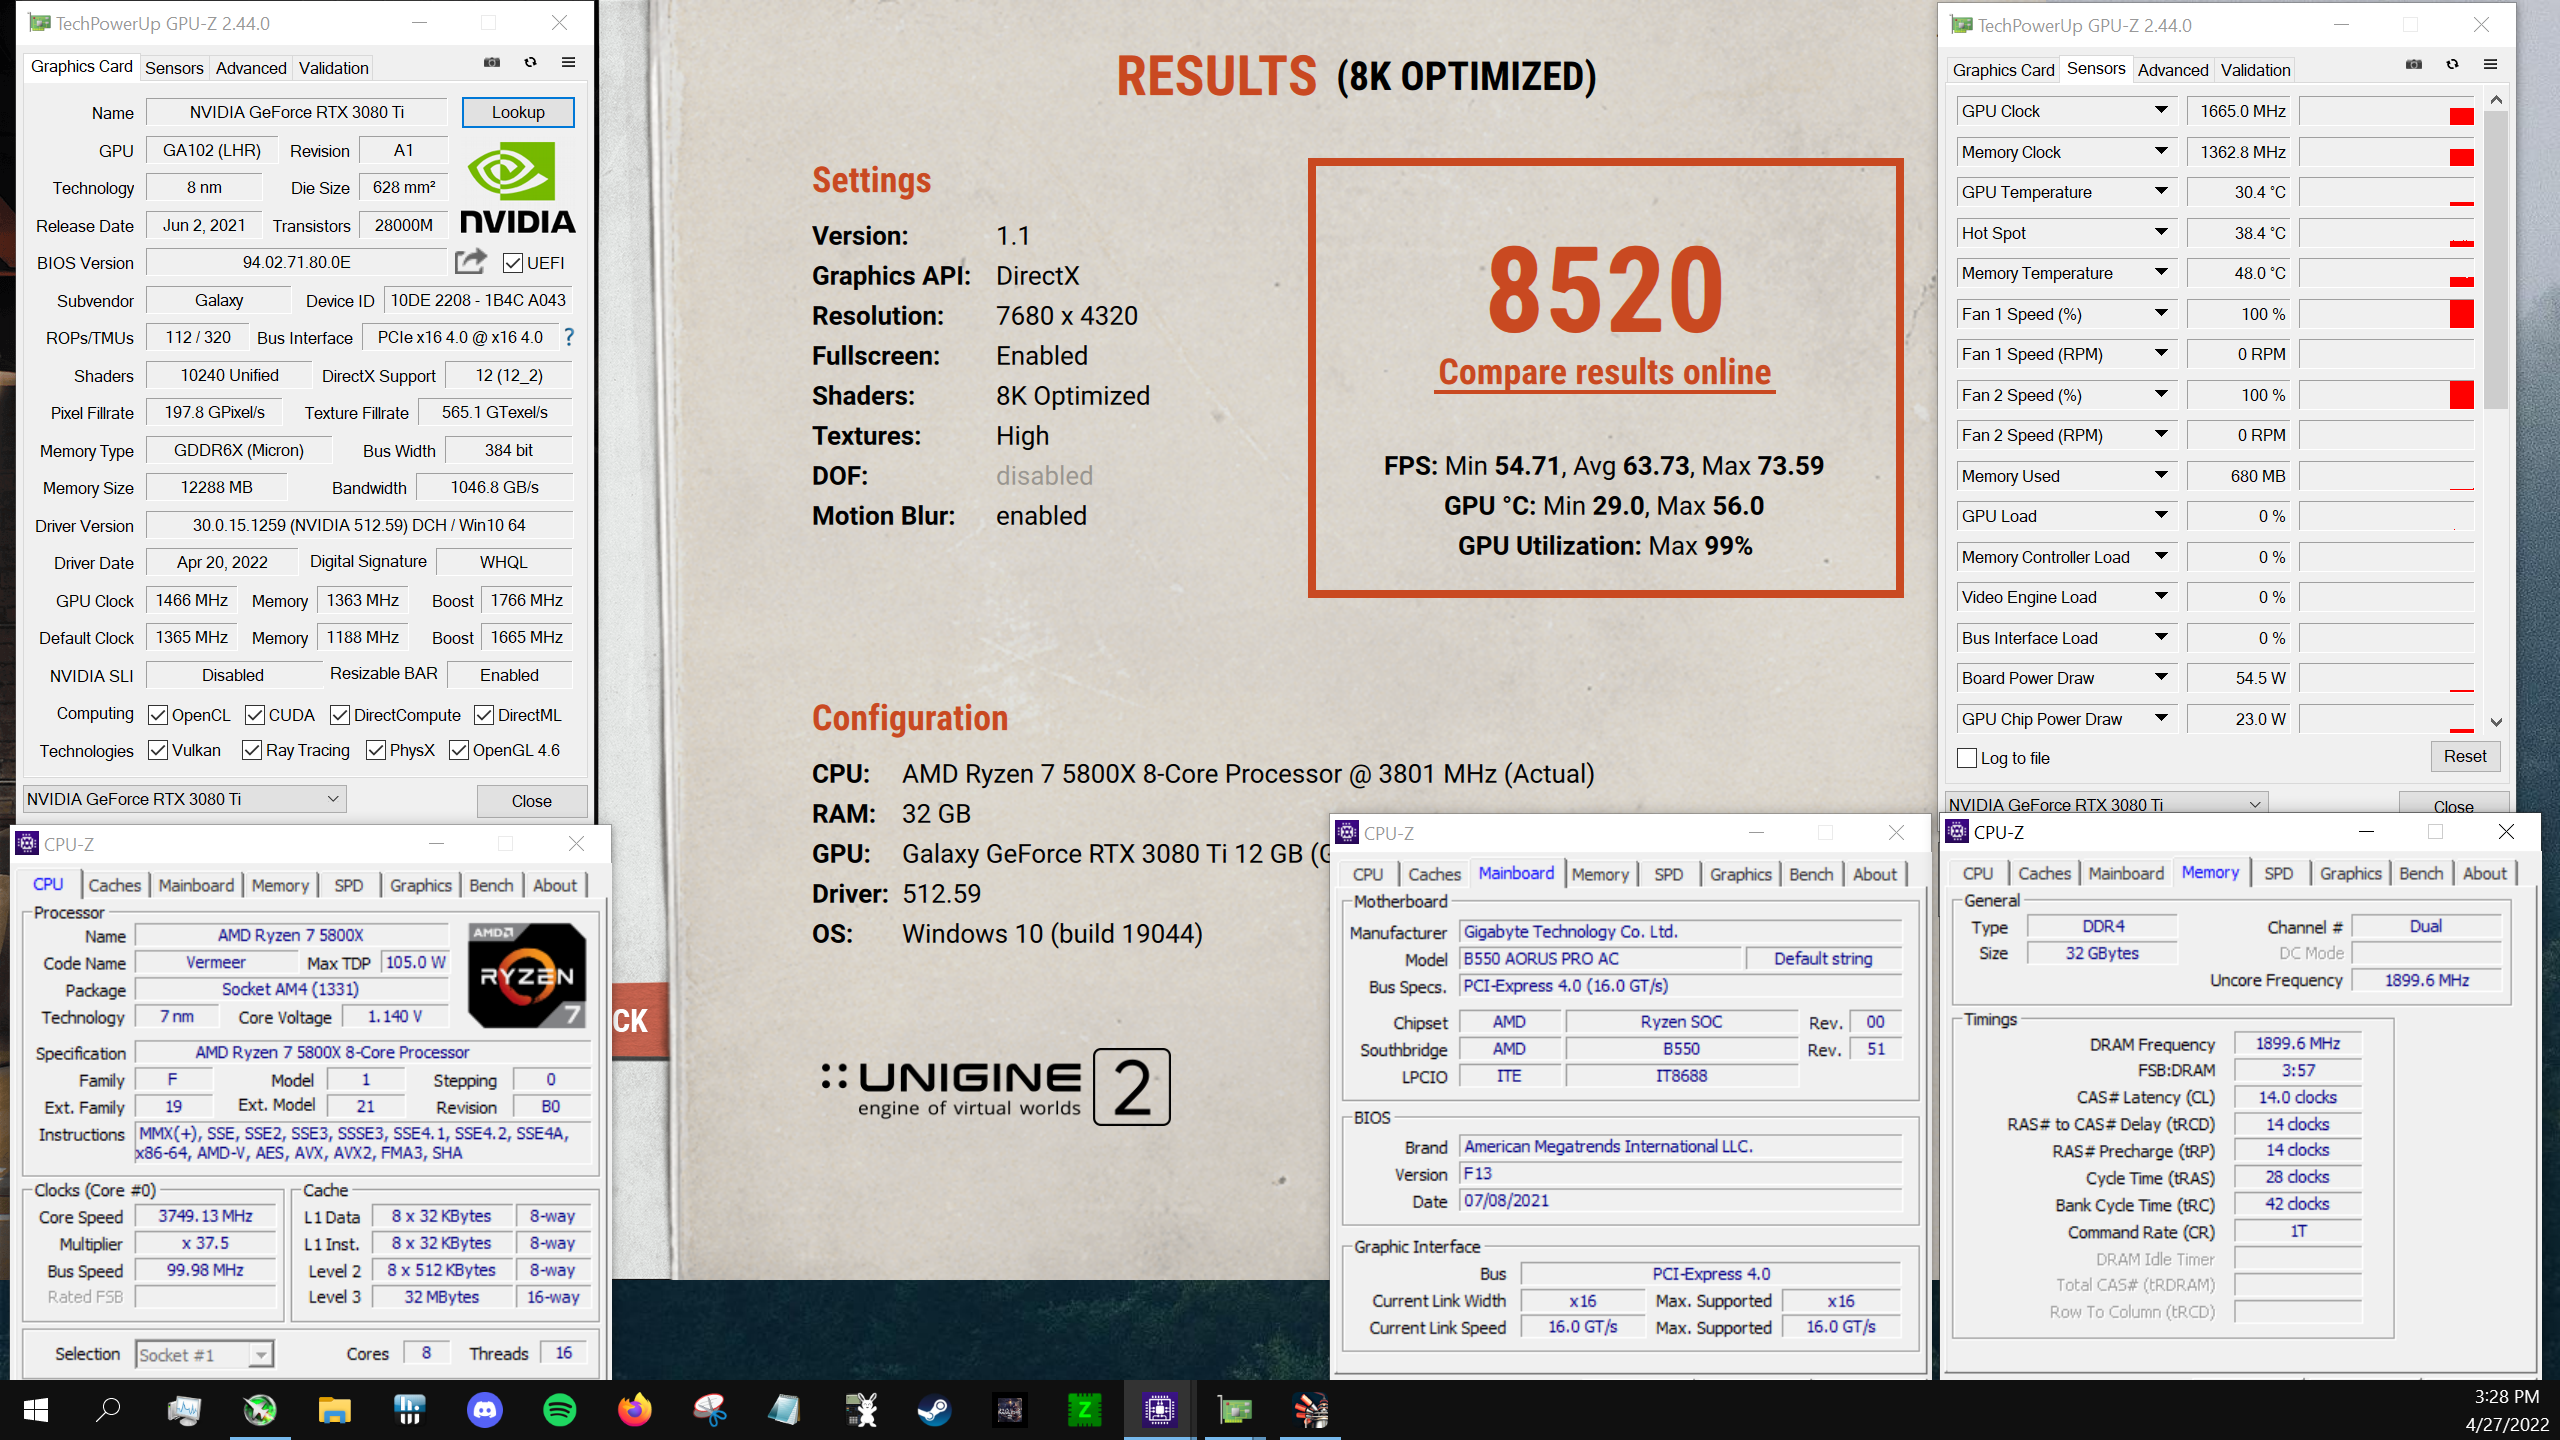 Deity`s Unigine Superposition - 8K Optimized score: 8520 points with a  GeForce RTX 3080 Ti (384 bit)